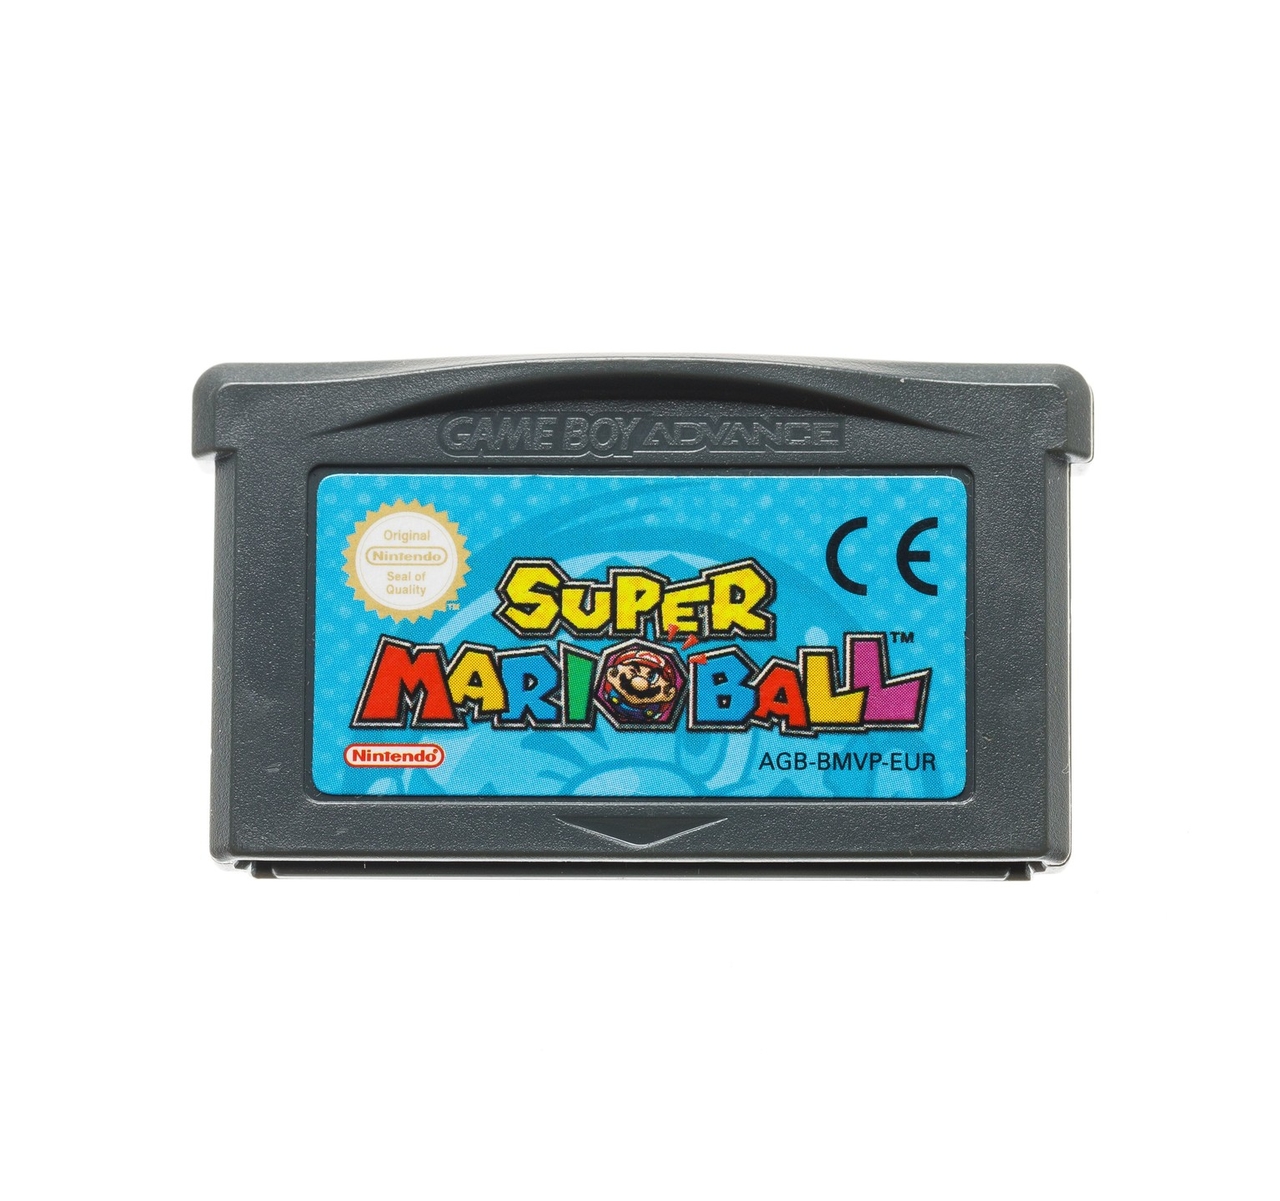 Super Mario Ball - Gameboy Advance Games